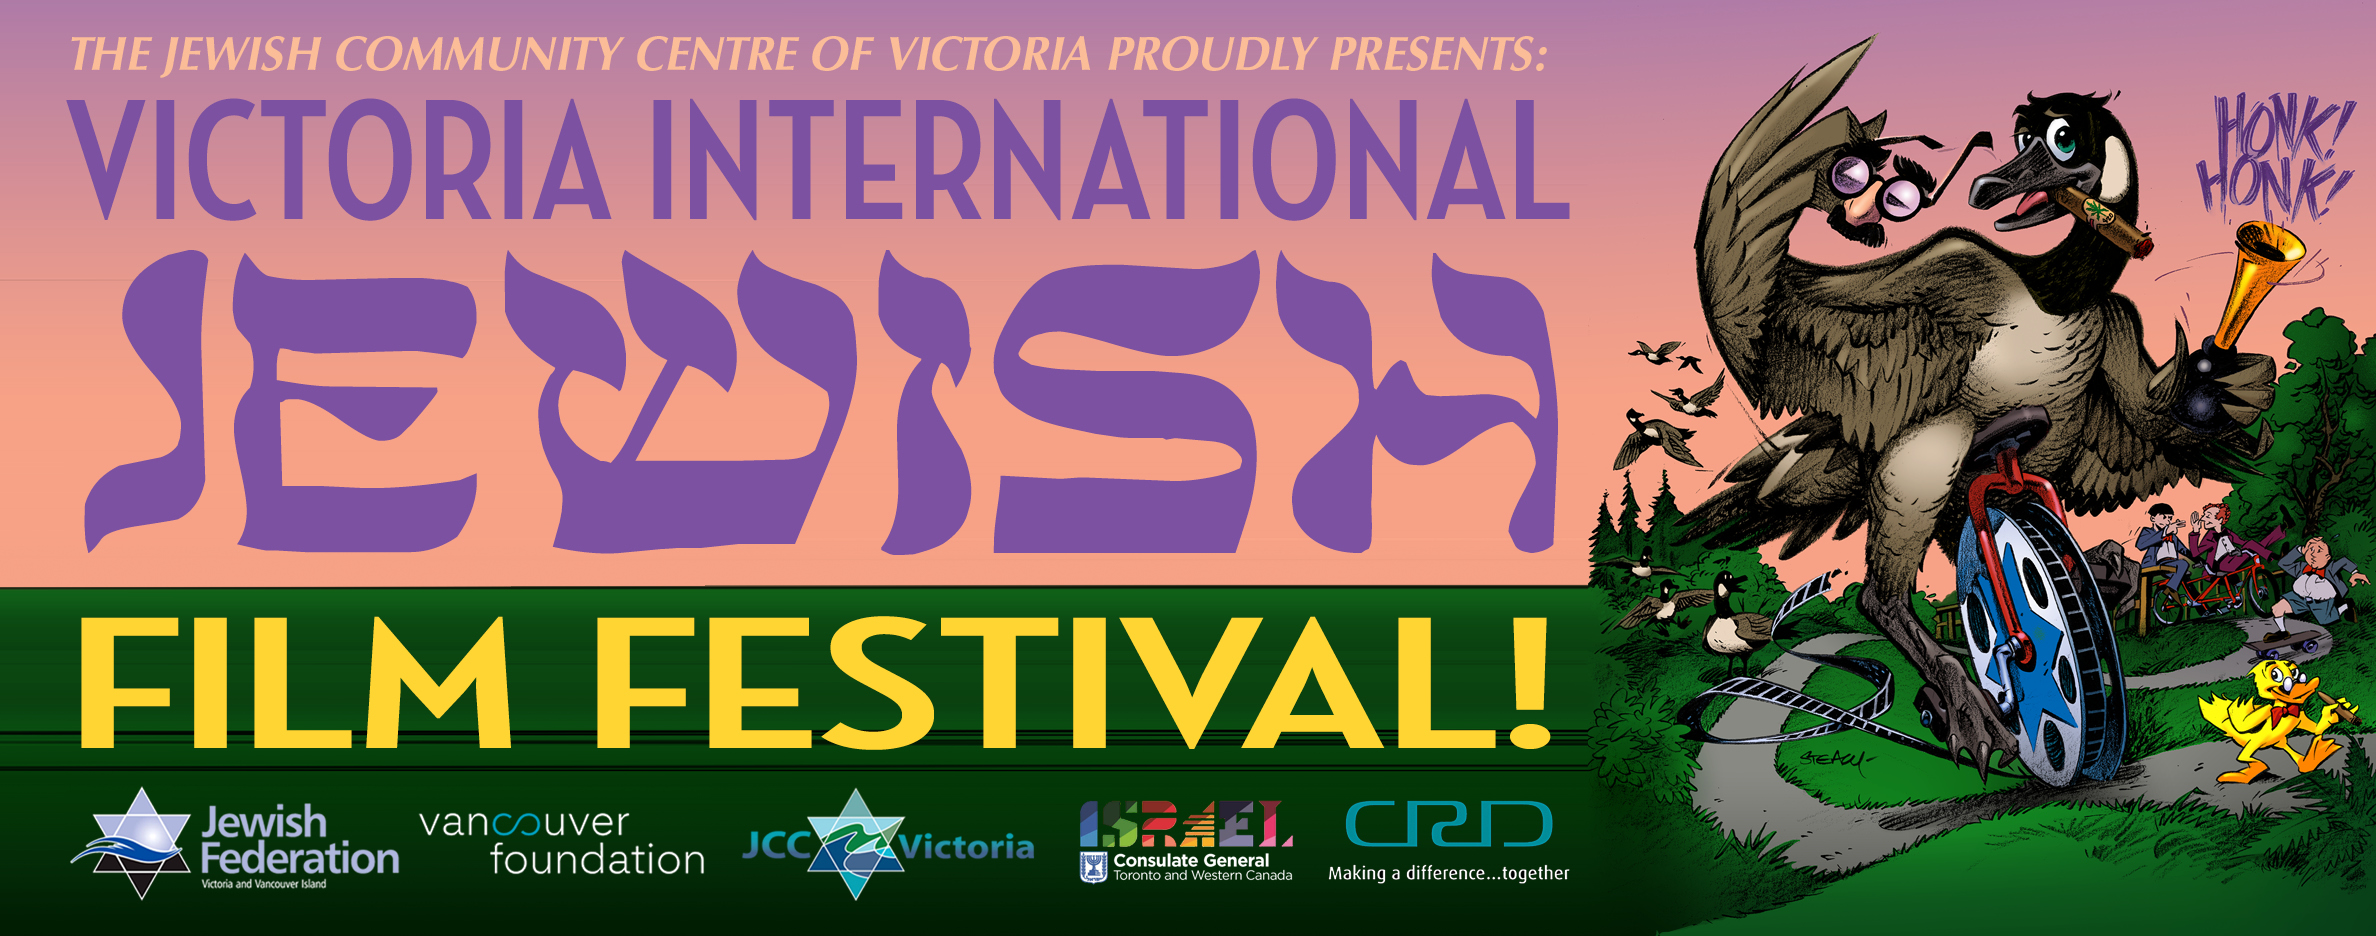 Victoria International Jewish Film Festival